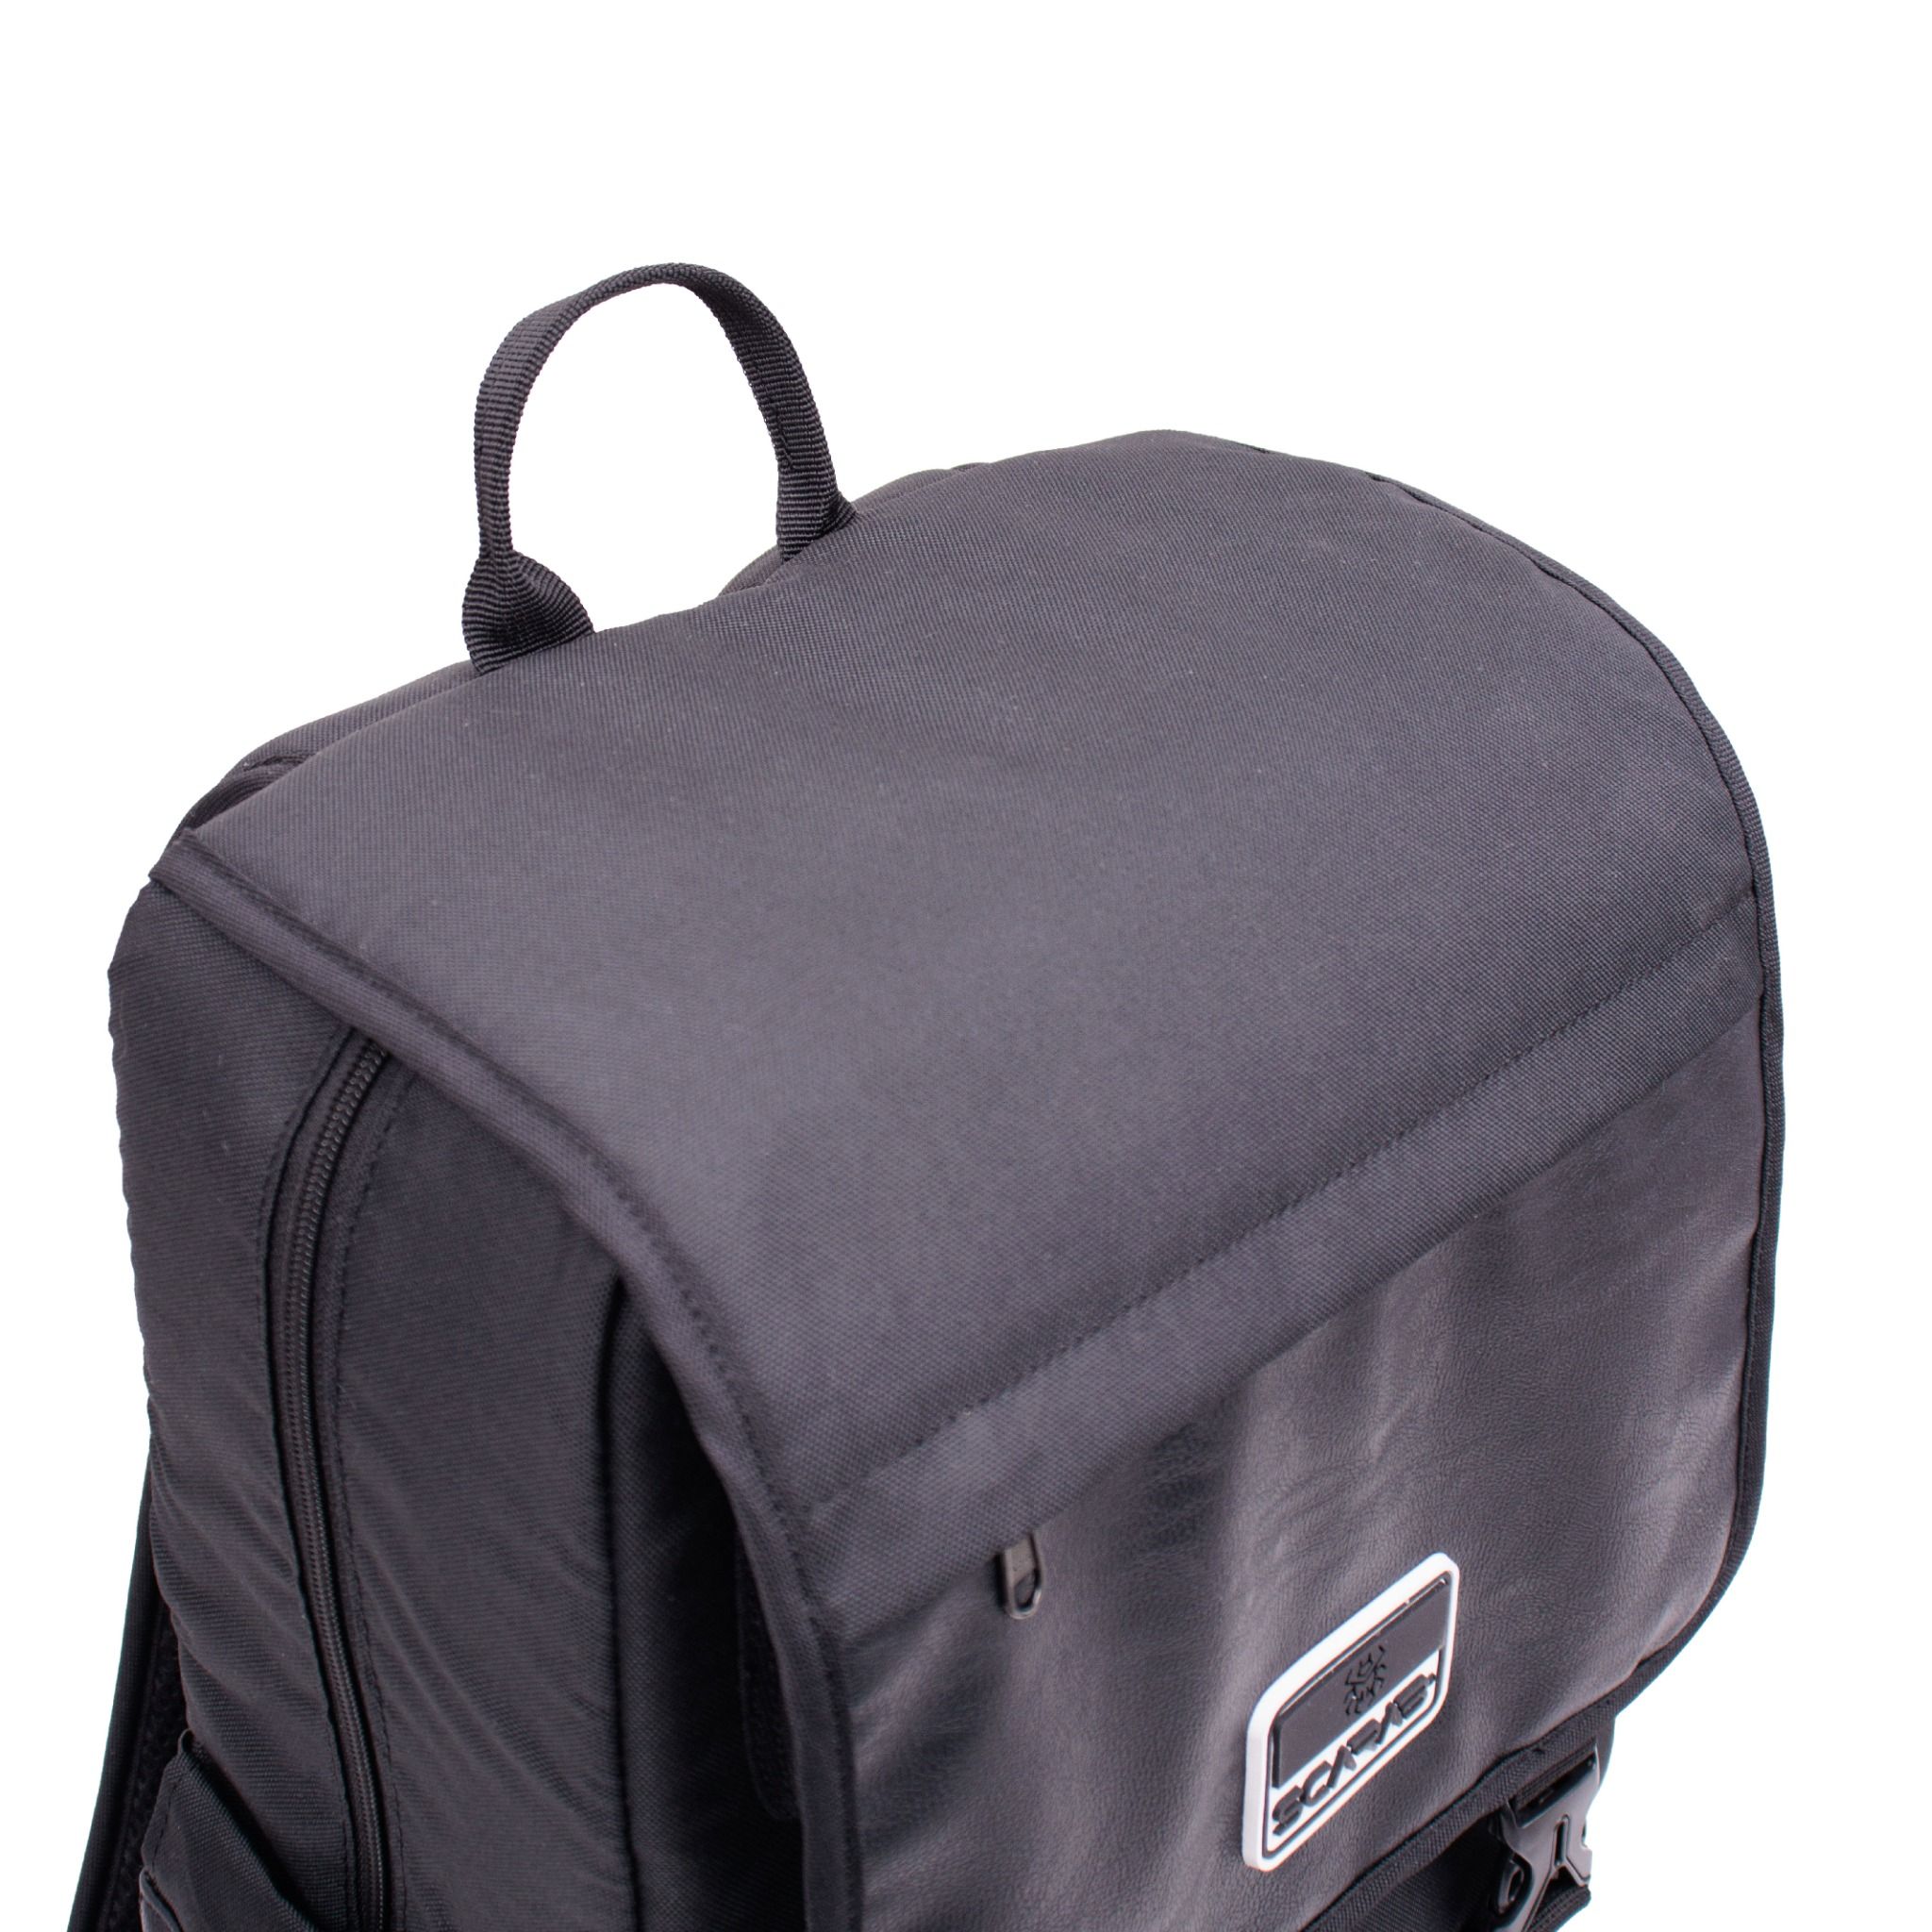  Tetris Backpack - Black Leather 